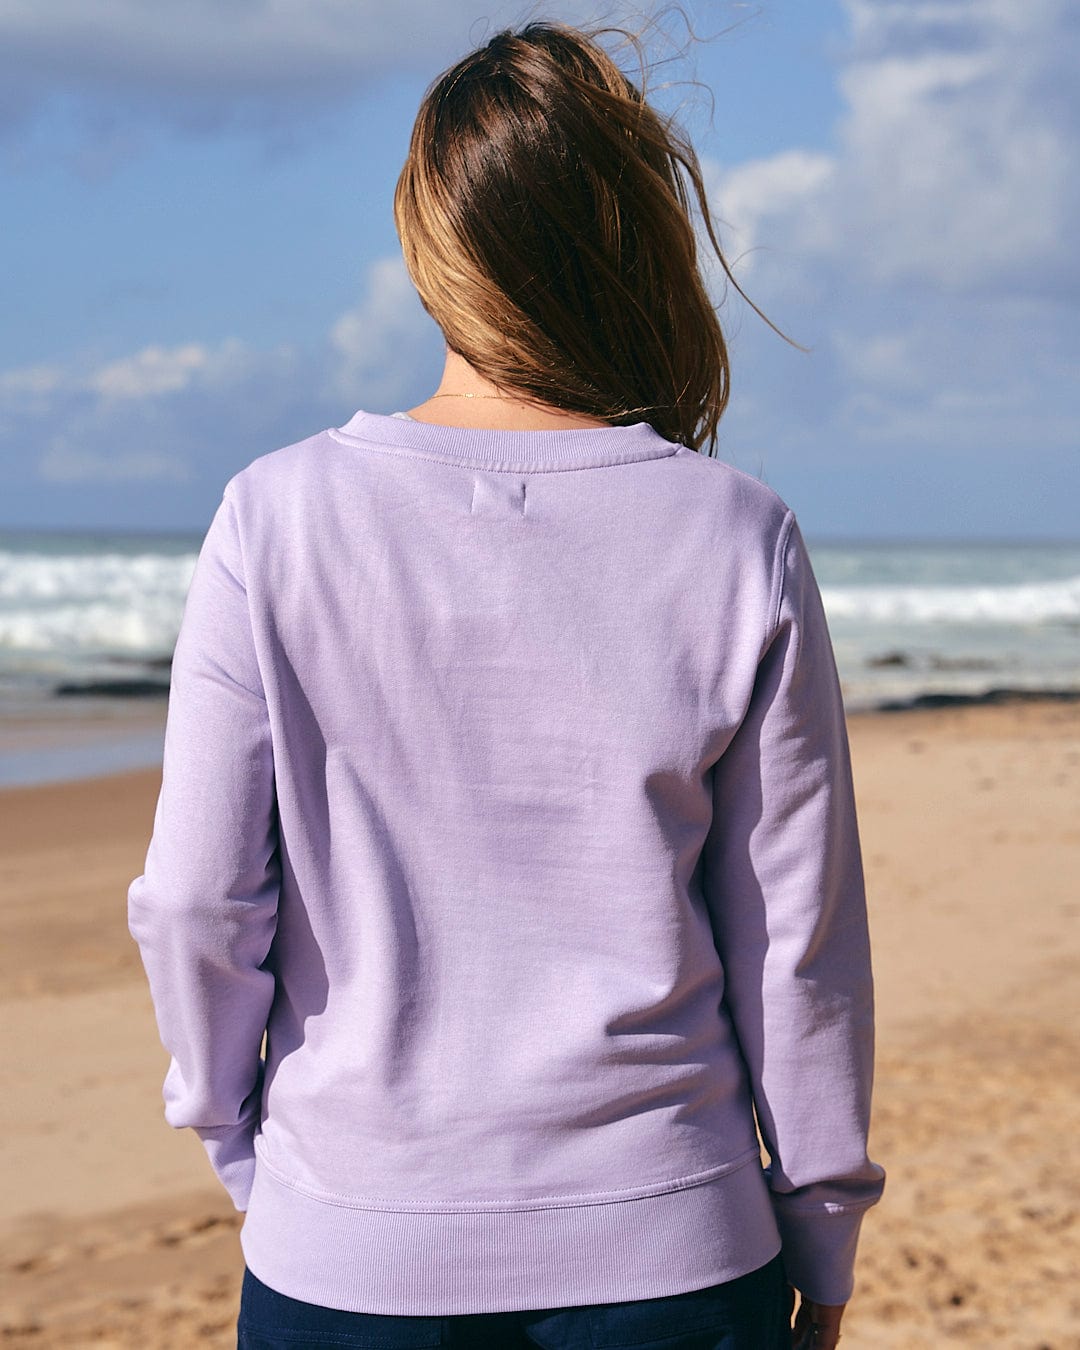 The back of a woman wearing a Saltrock Poster Stripe - Womens Crew Sweat - Light Purple on the beach.